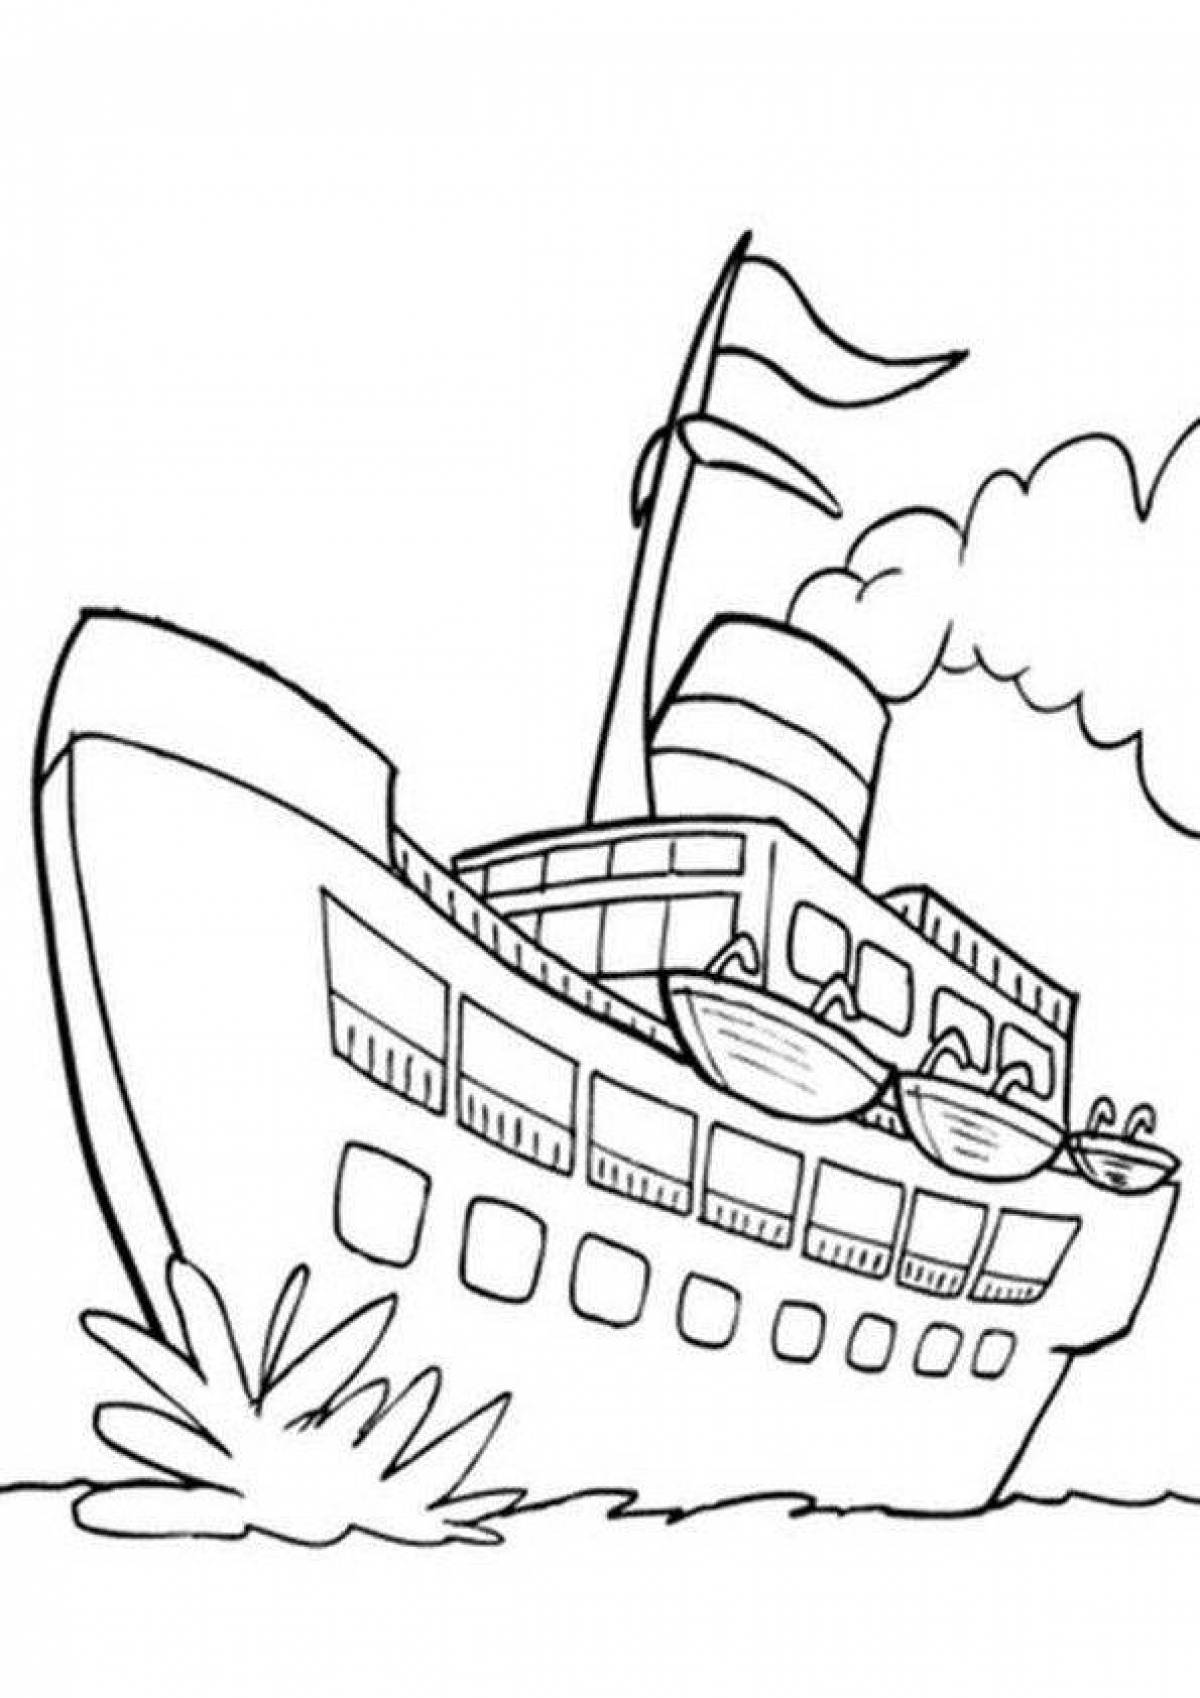 Shining steamship coloring page